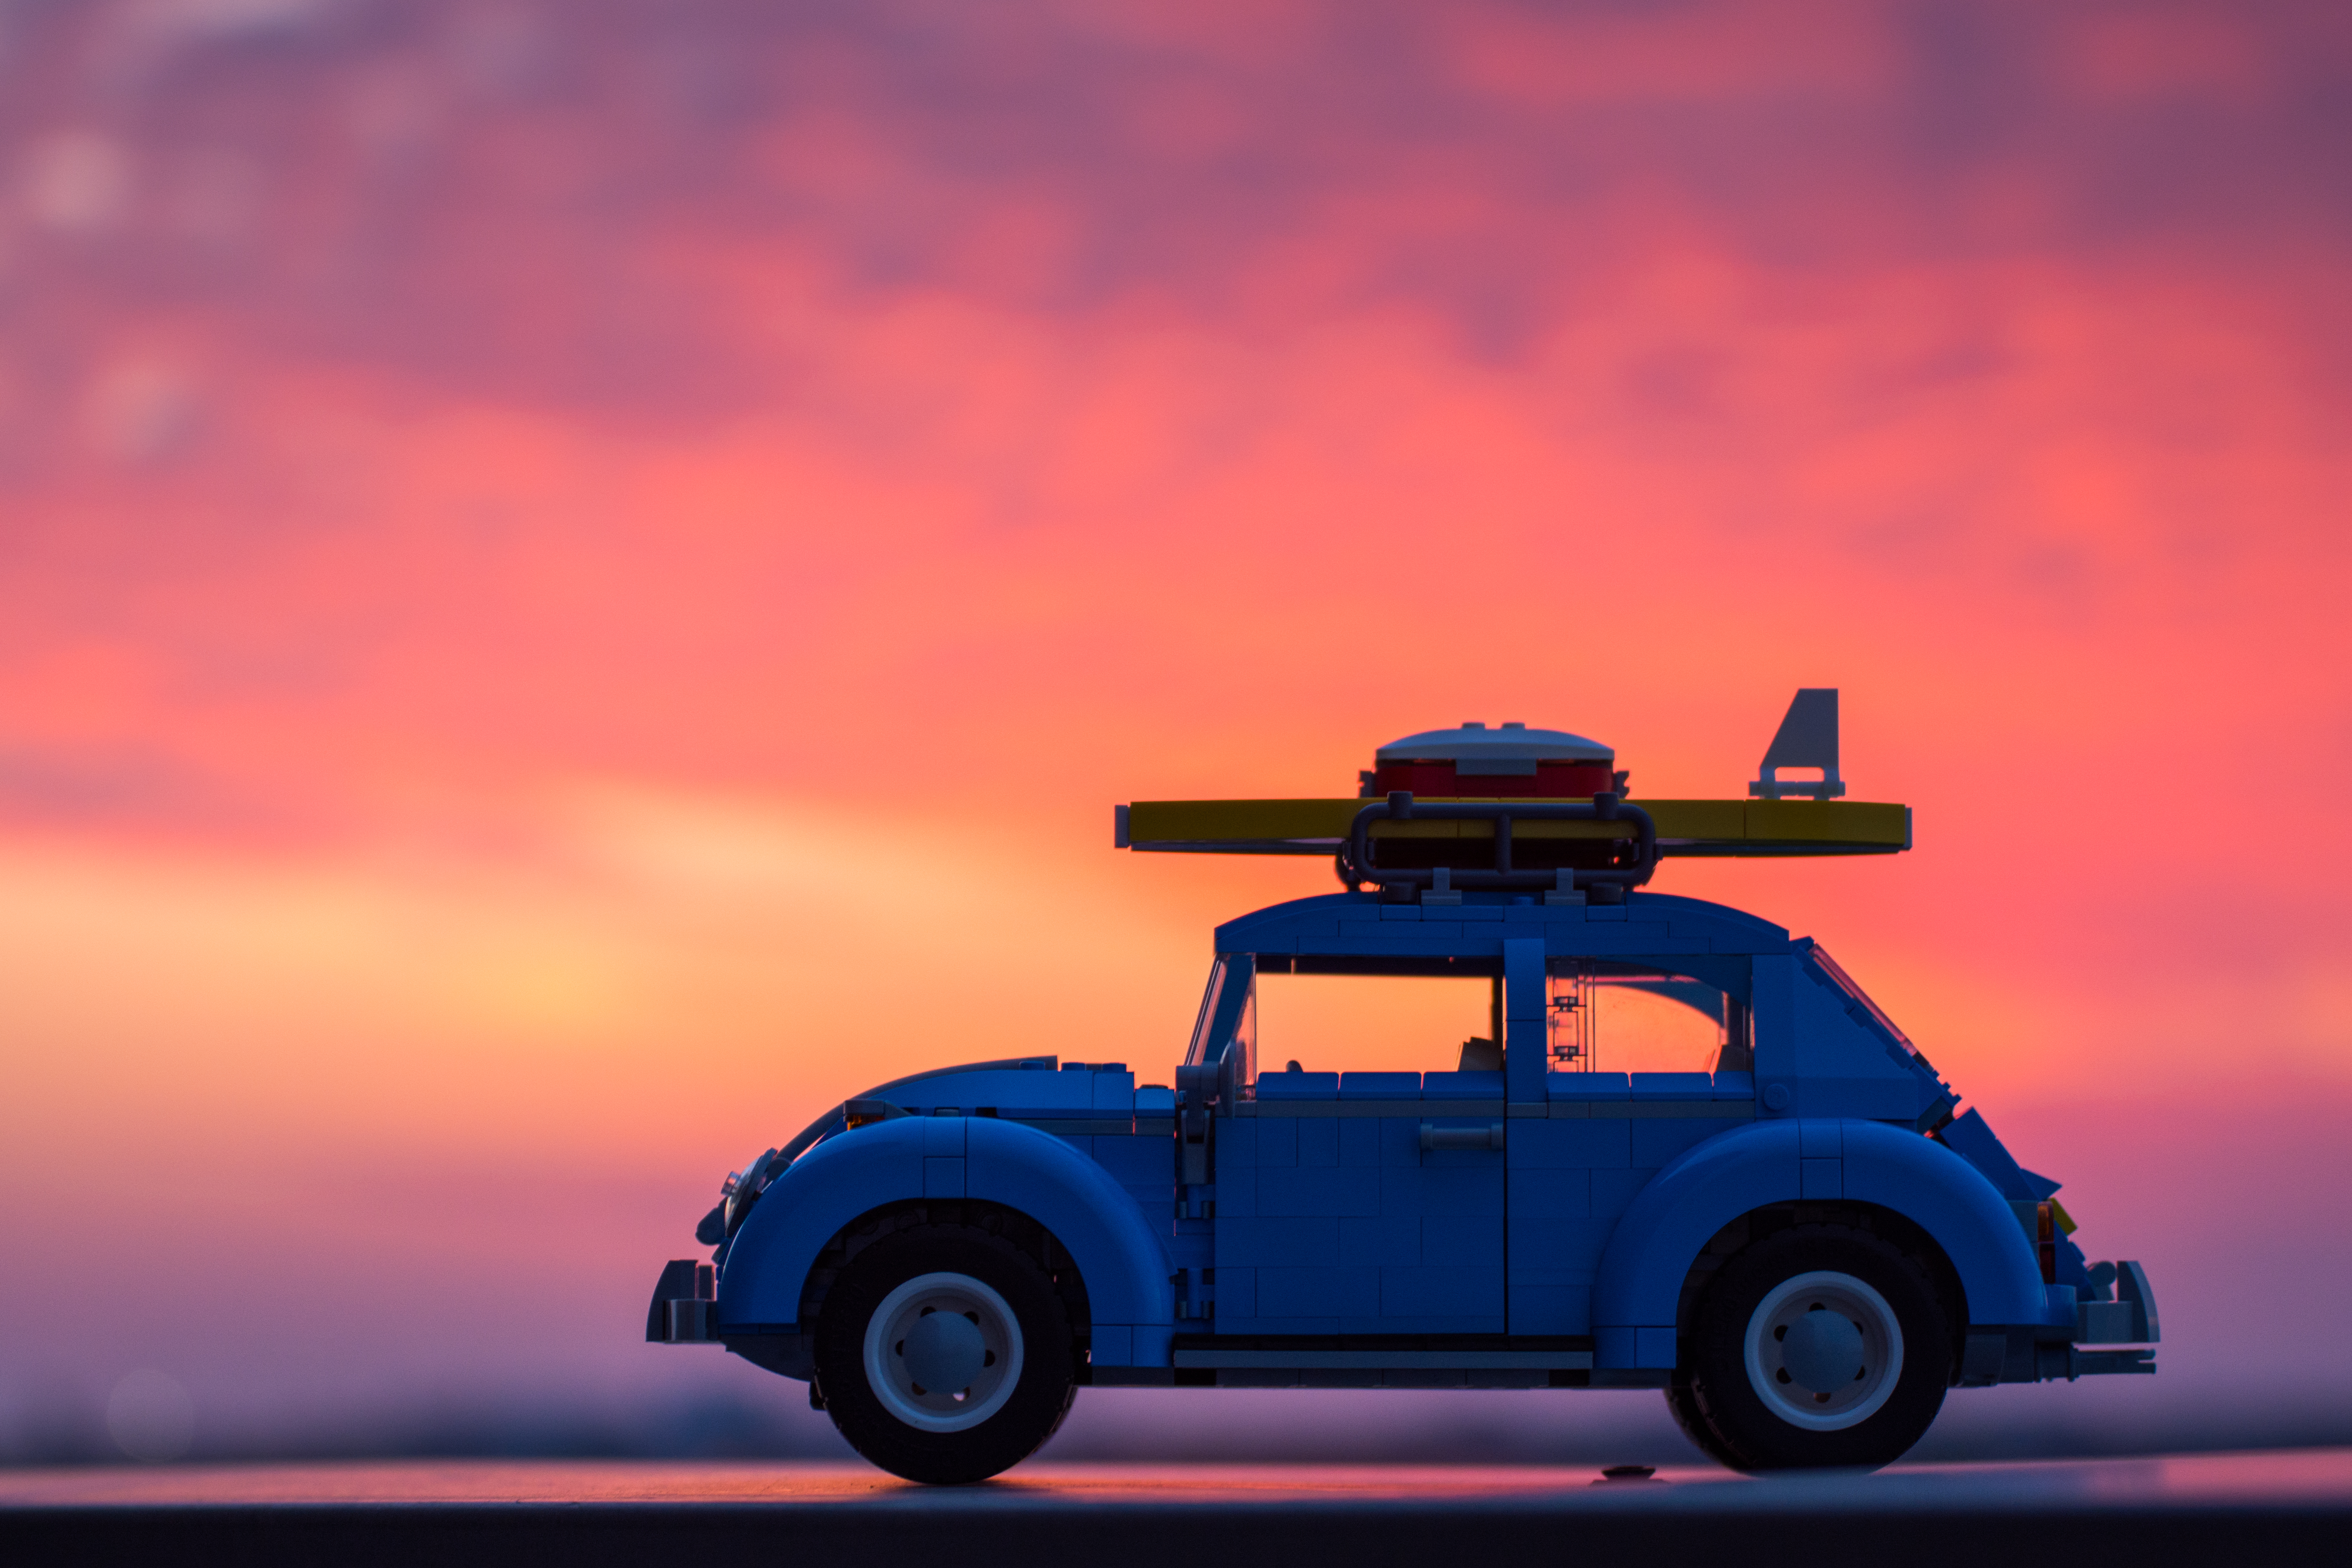 Car LEGO Volkswagen Beetle Sunset Toys Surfboards Miniatures Depth Of Field 5956x3971